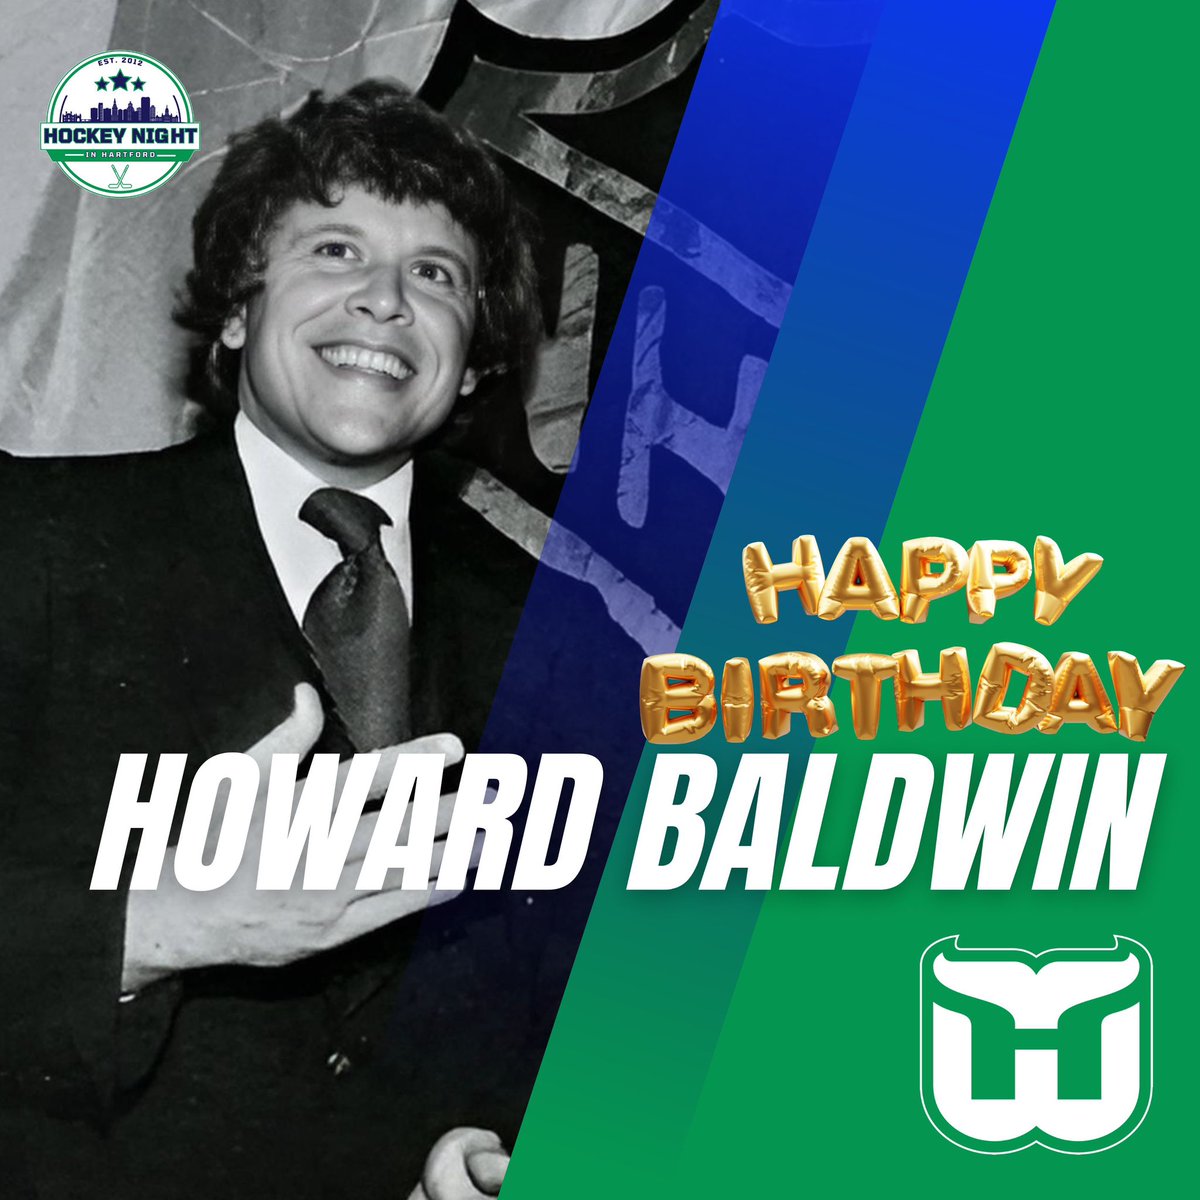 Happy birthday, Howard Baldwin!
#Whalers